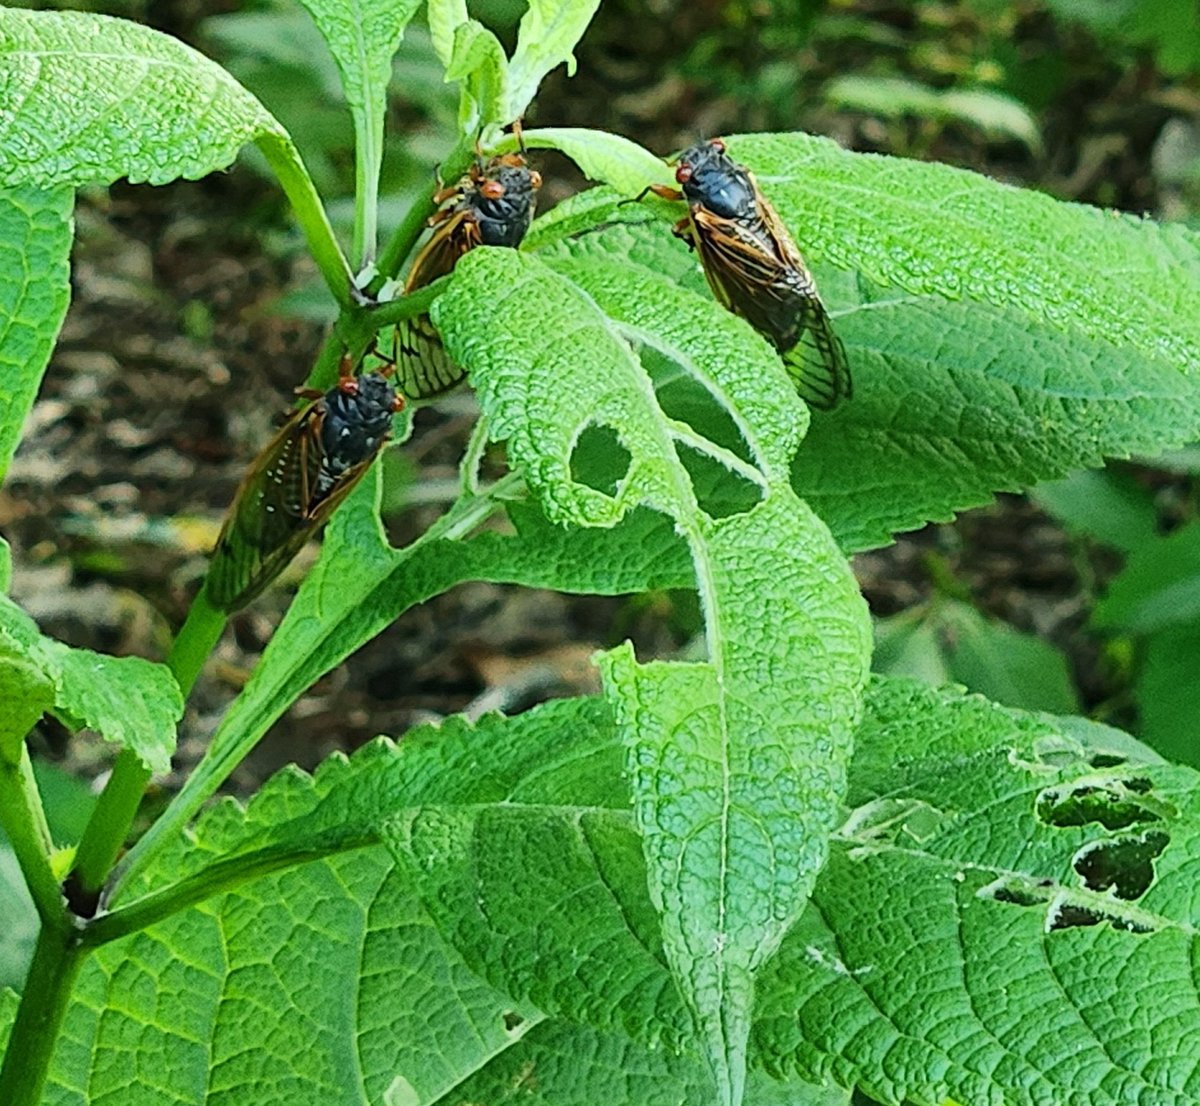 Cicadas are everywhere--on plants, tree leaves and flying around @MortonArboretum.